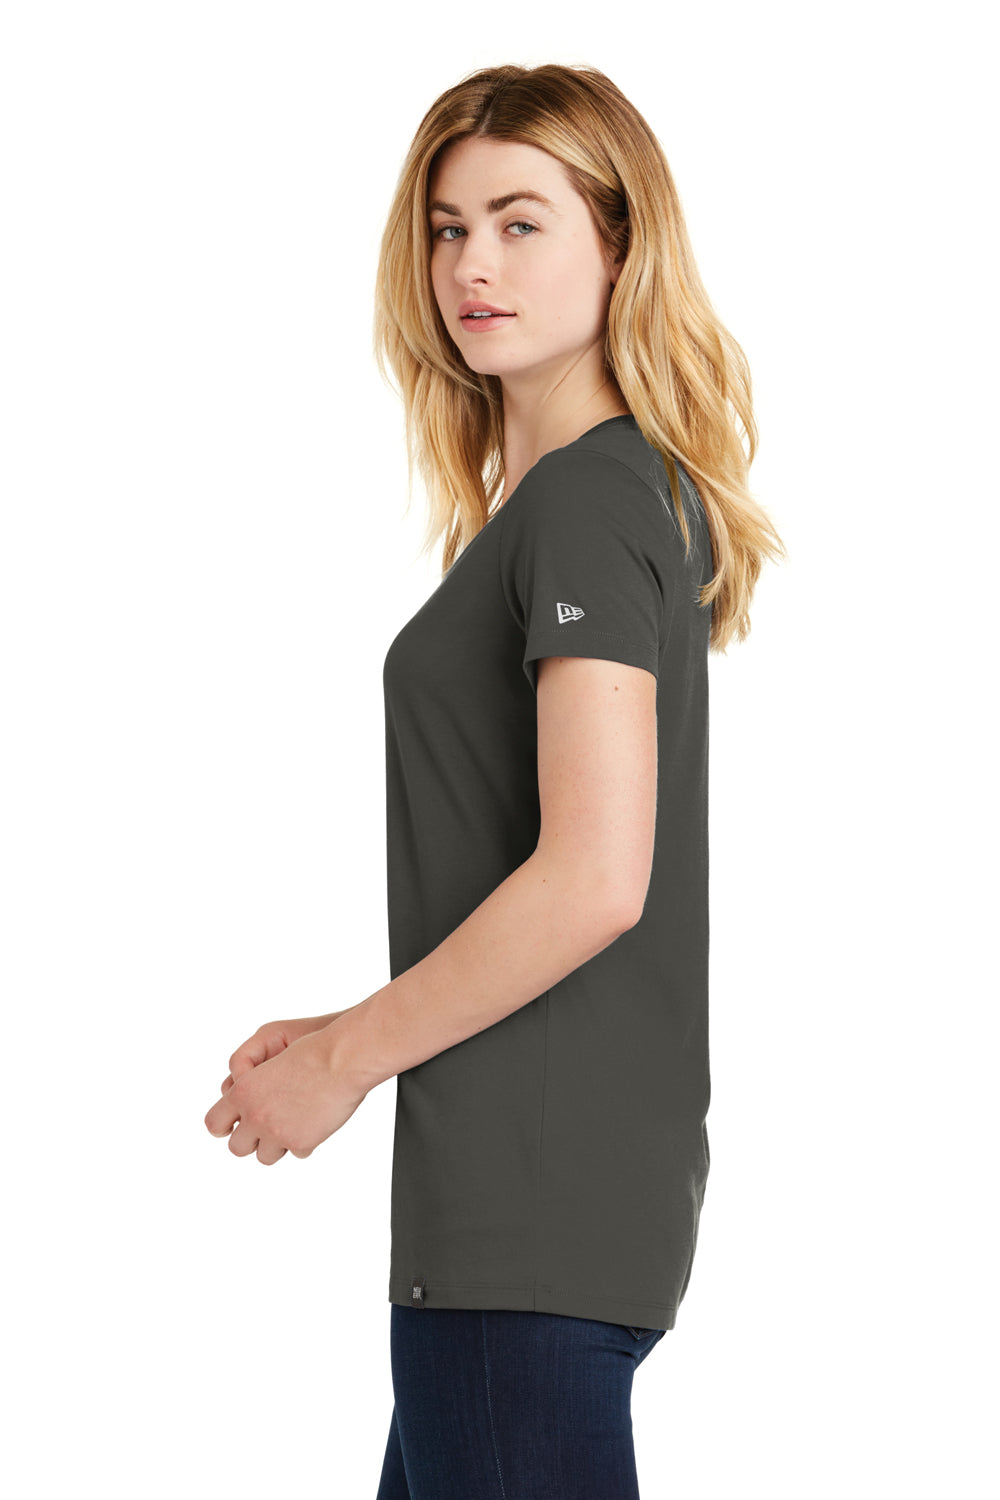 New Era LNEA101 Womens Heritage Short Sleeve V-Neck T-Shirt Graphite Grey Side